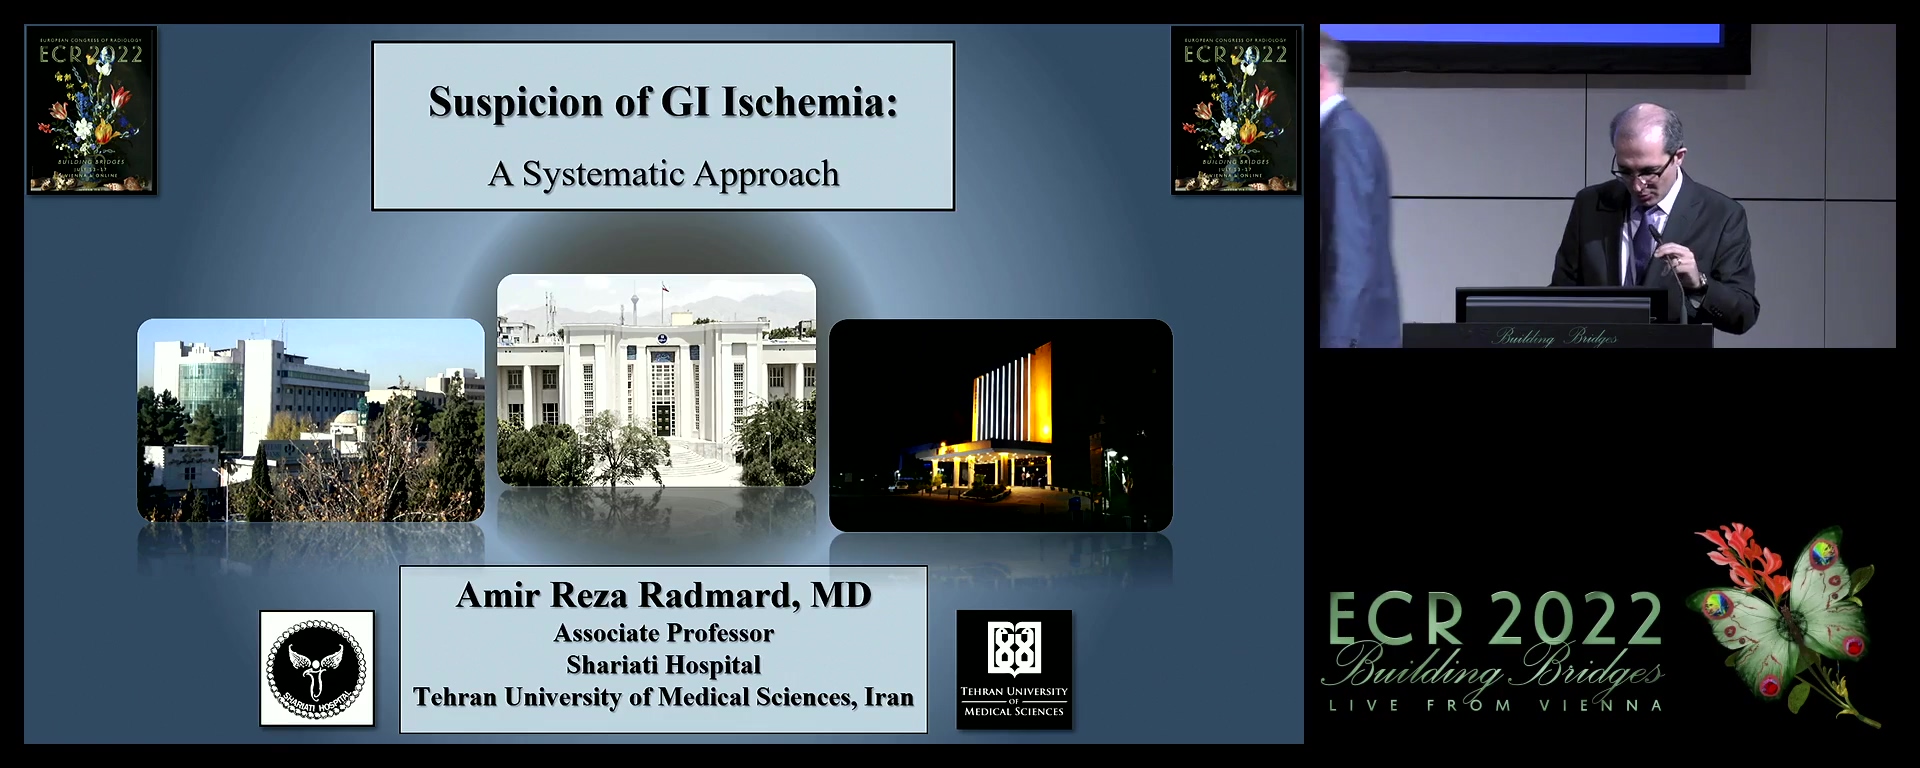 Suspicion of GI ischaemia: a systematic approach - Amir Reza Radmard, Tehran / IR